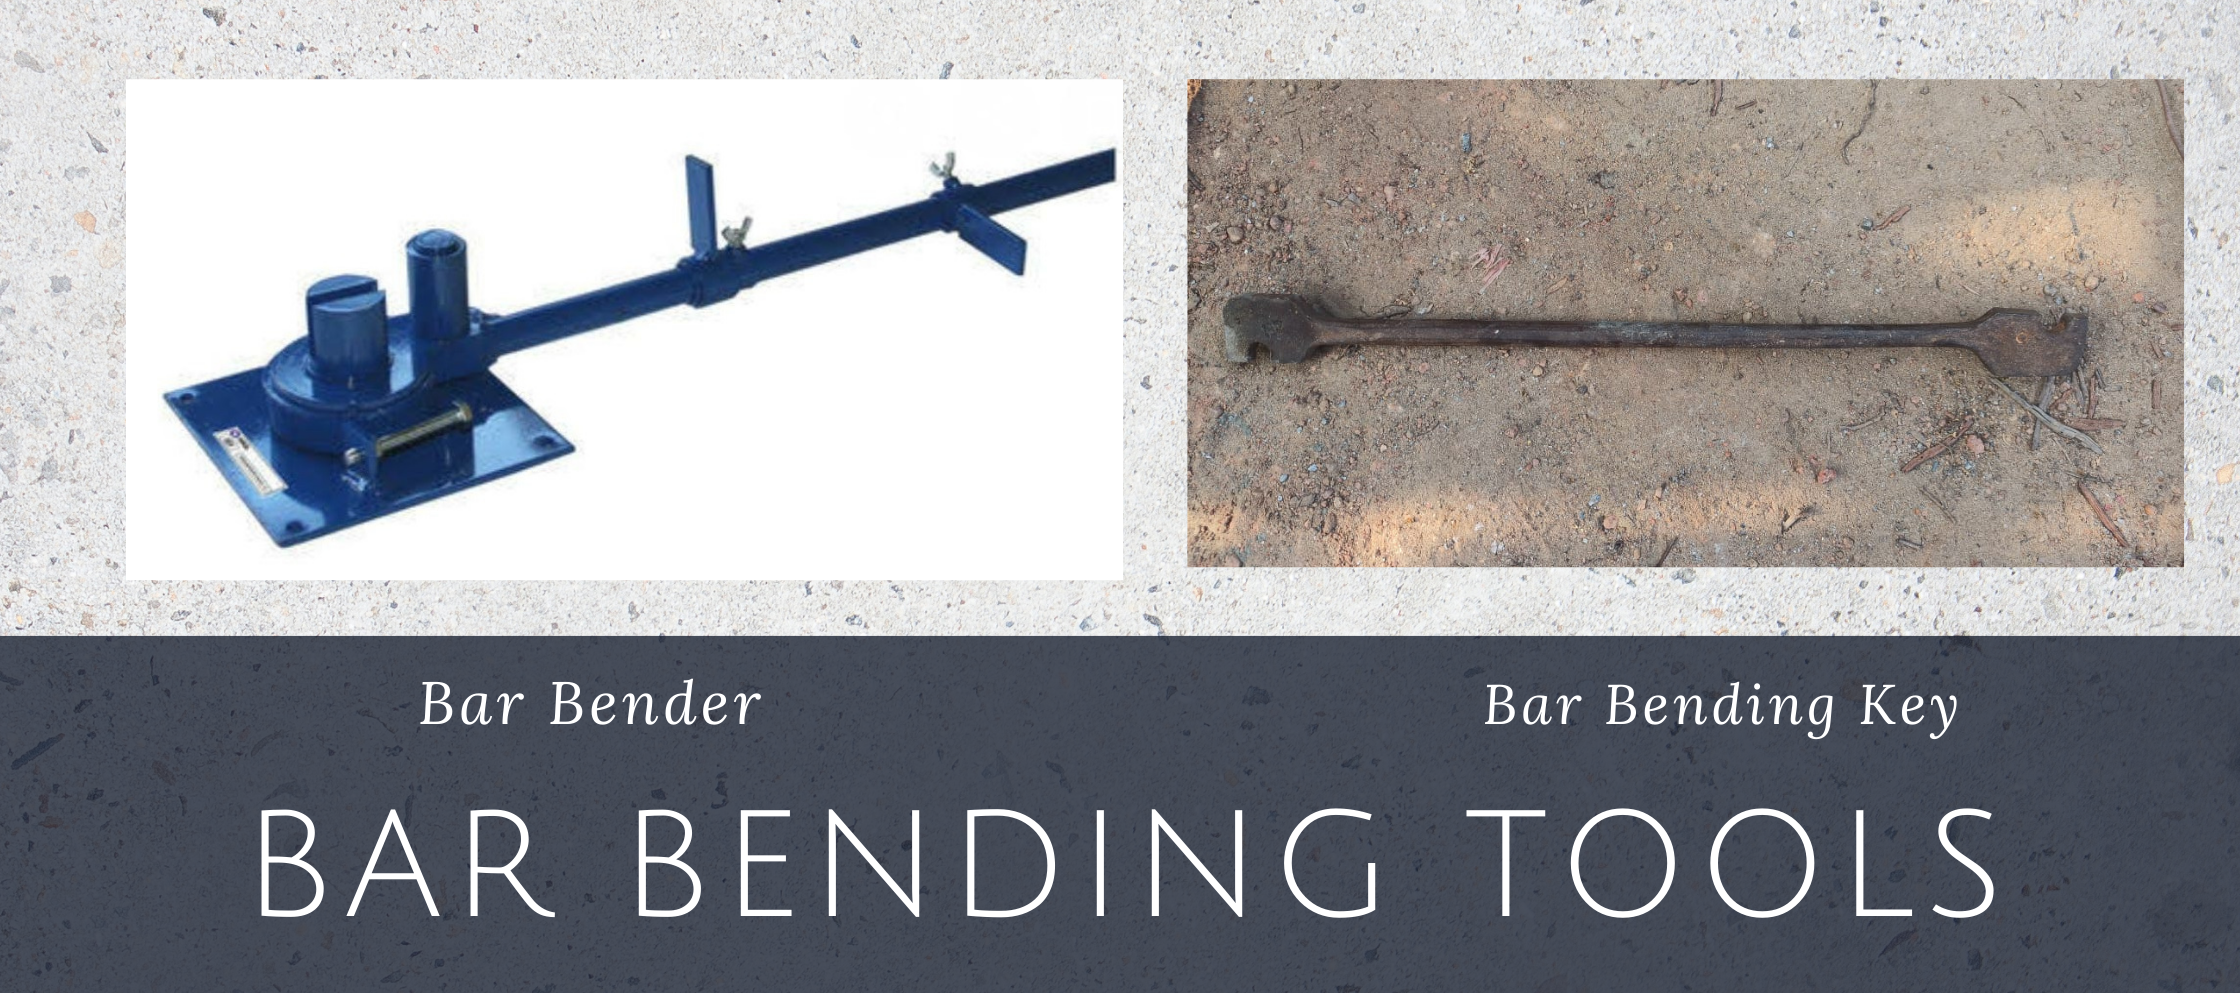 Bar bending tools